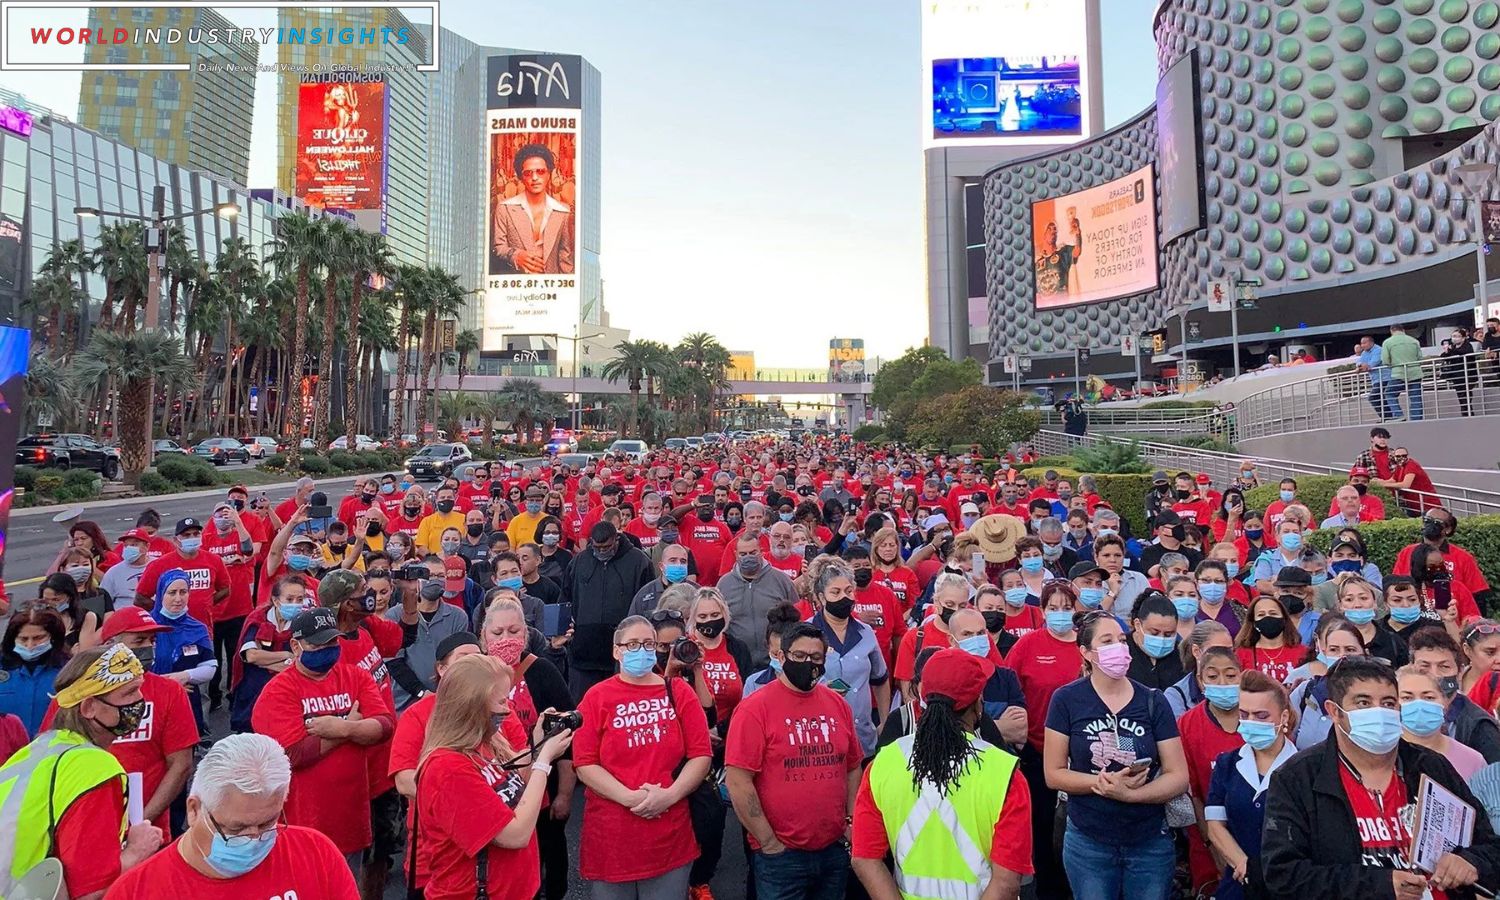 Las Vegas Workers Ready to Strike